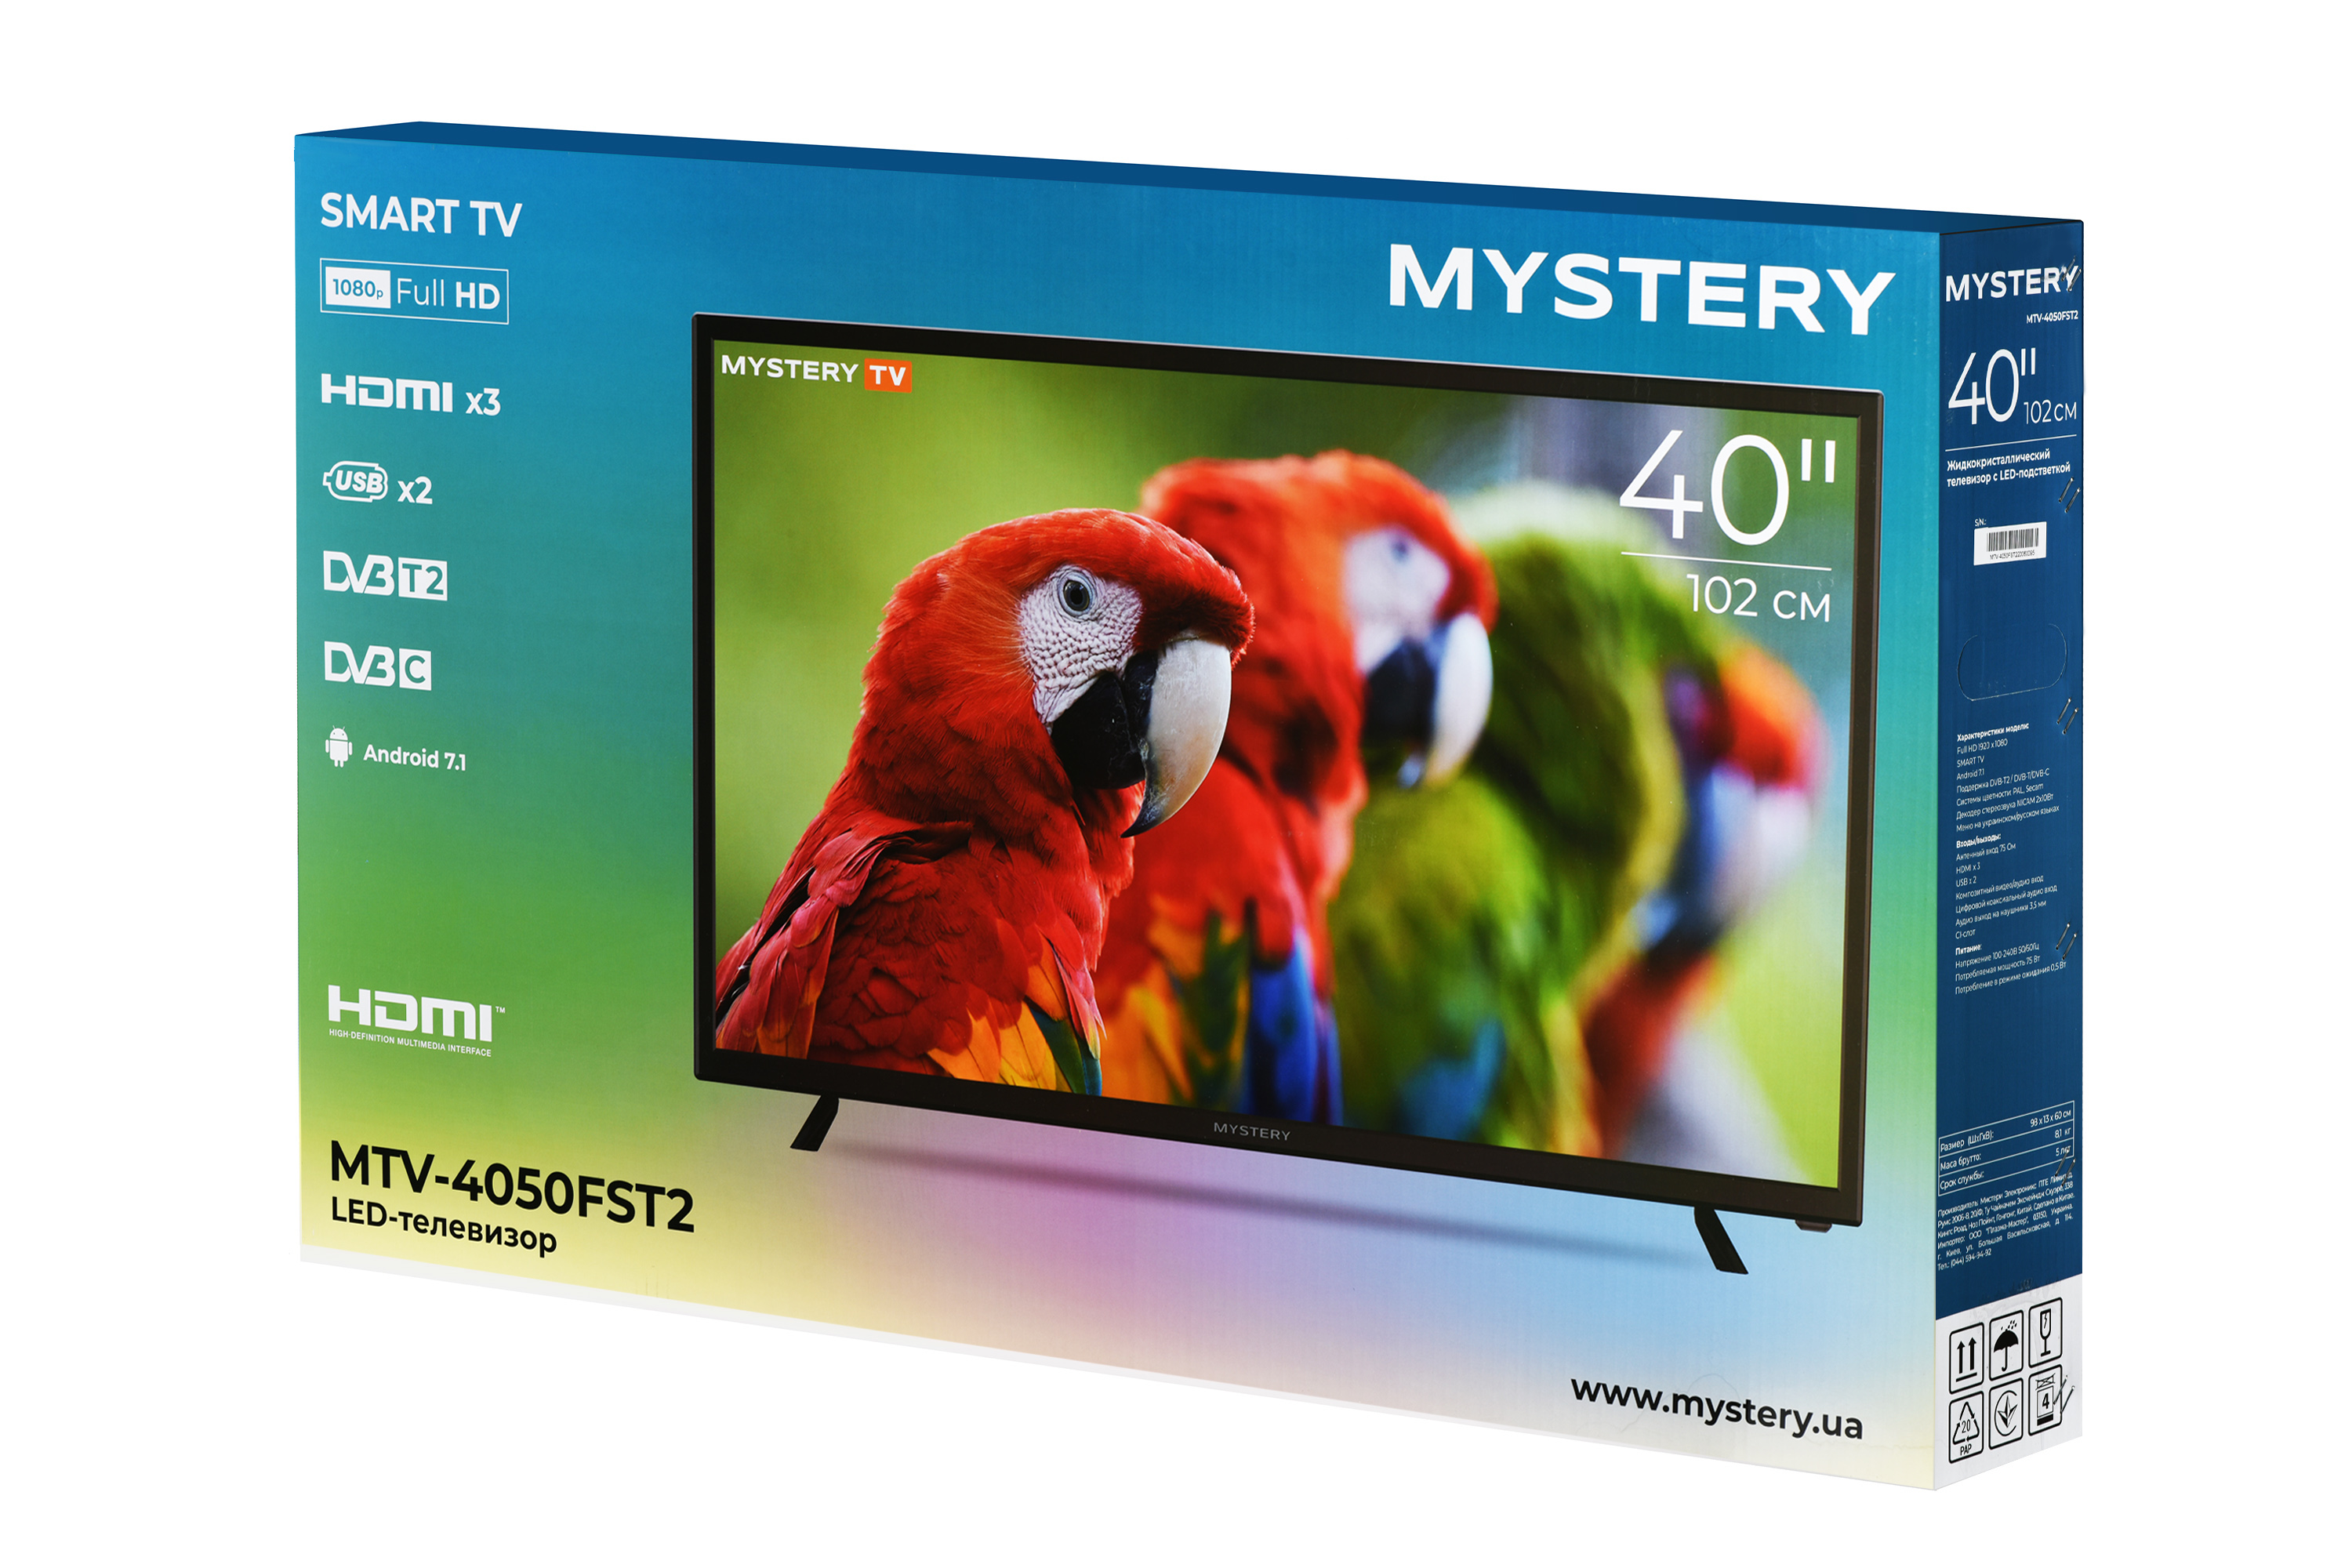 Smart-телевизор Mystery MTV-4050FST2